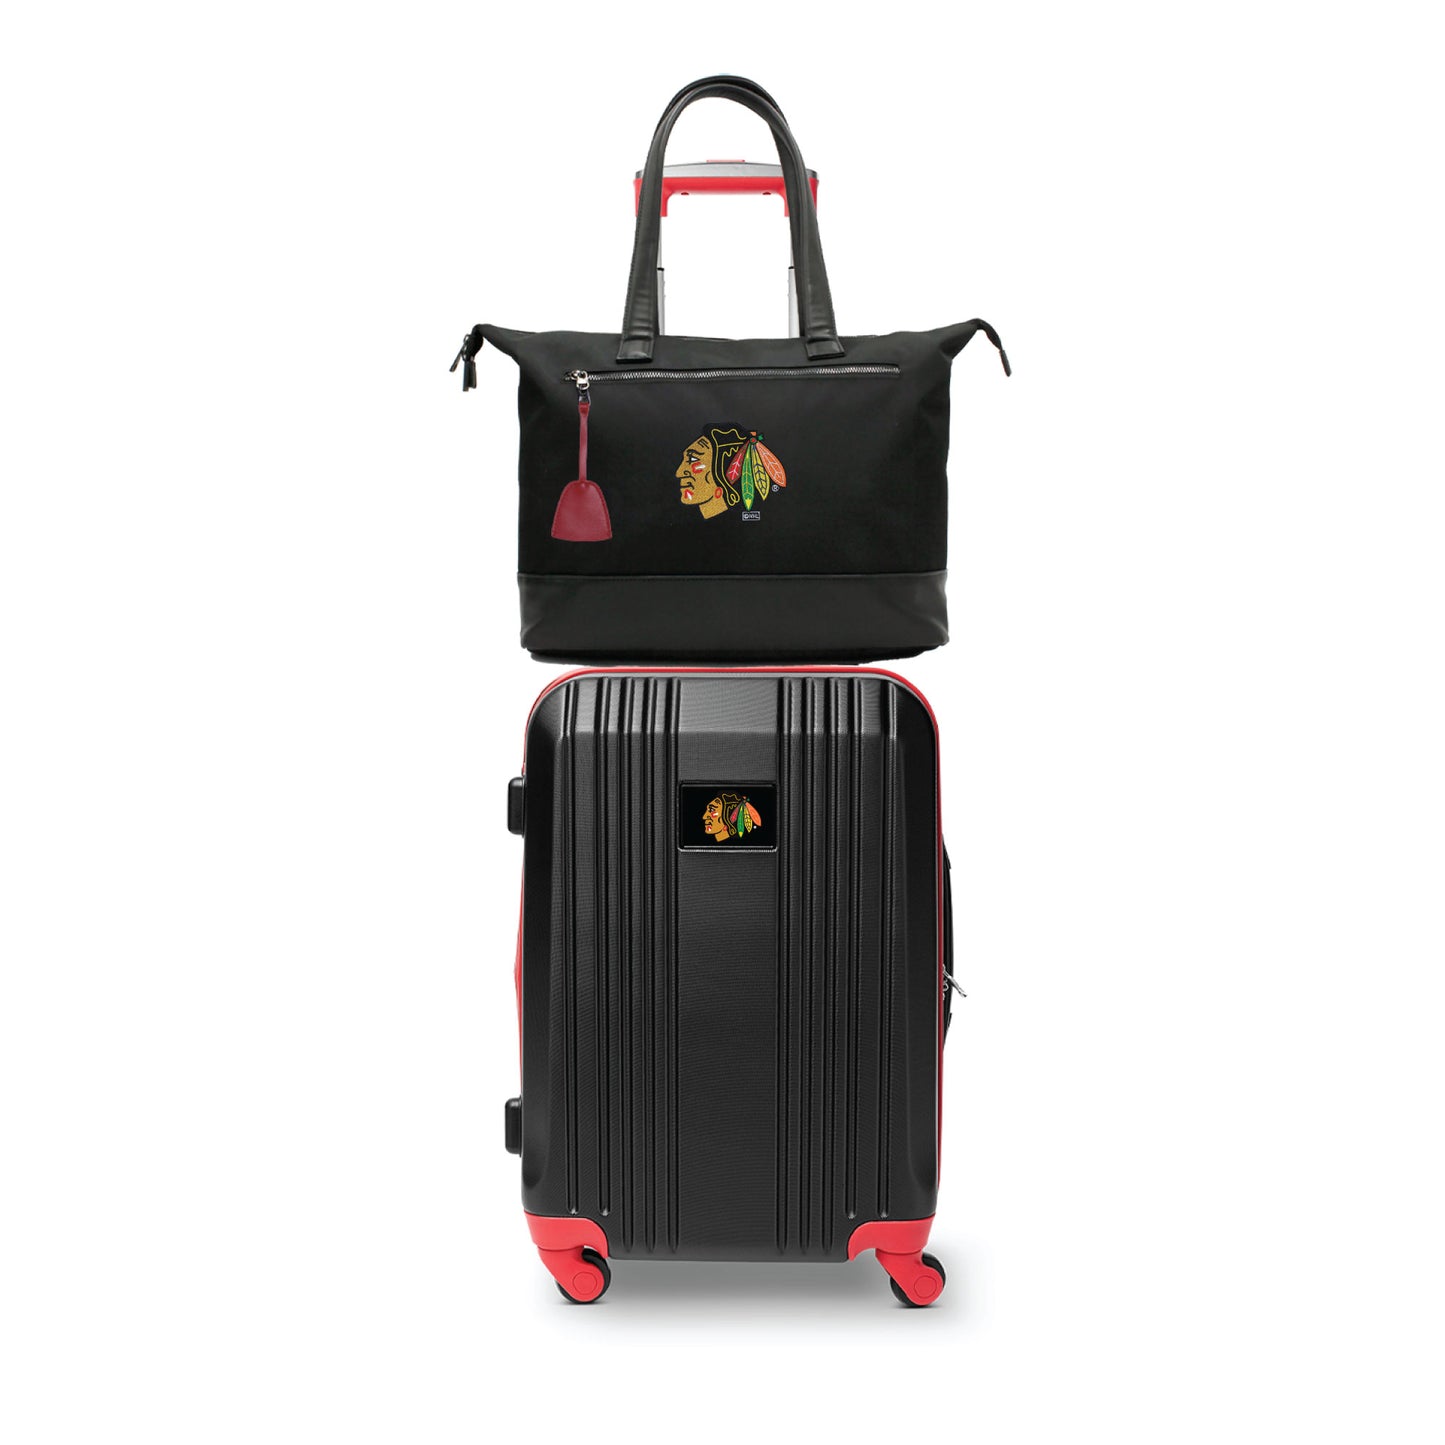 Chicago Blackhawks Premium Laptop Tote Bag and Luggage Set